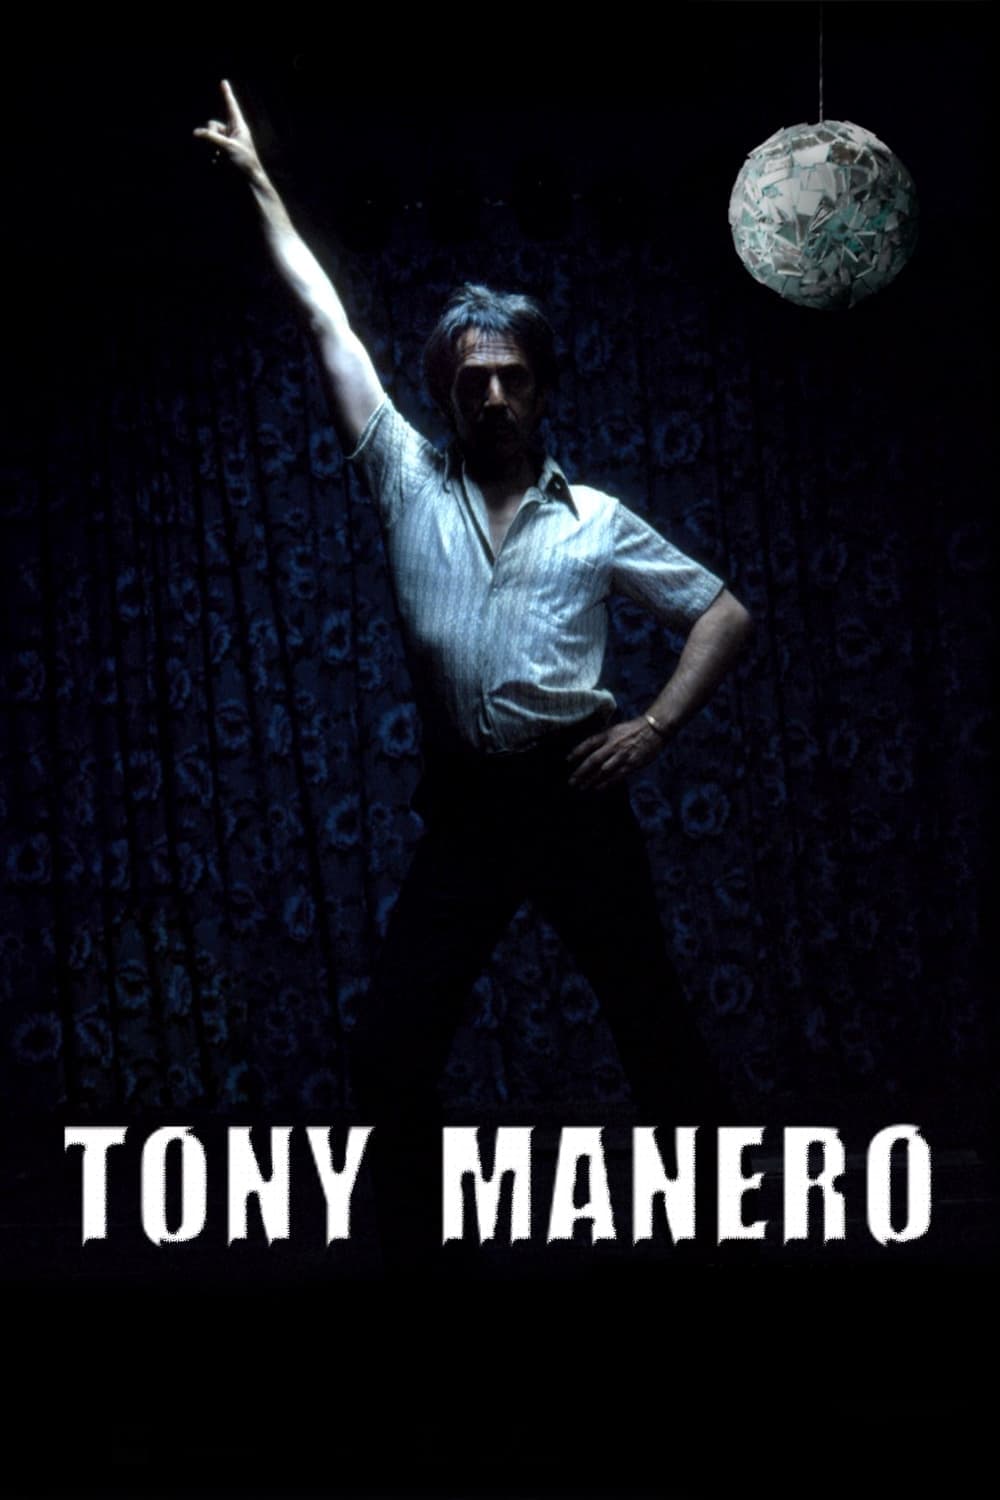 Tony Manero film